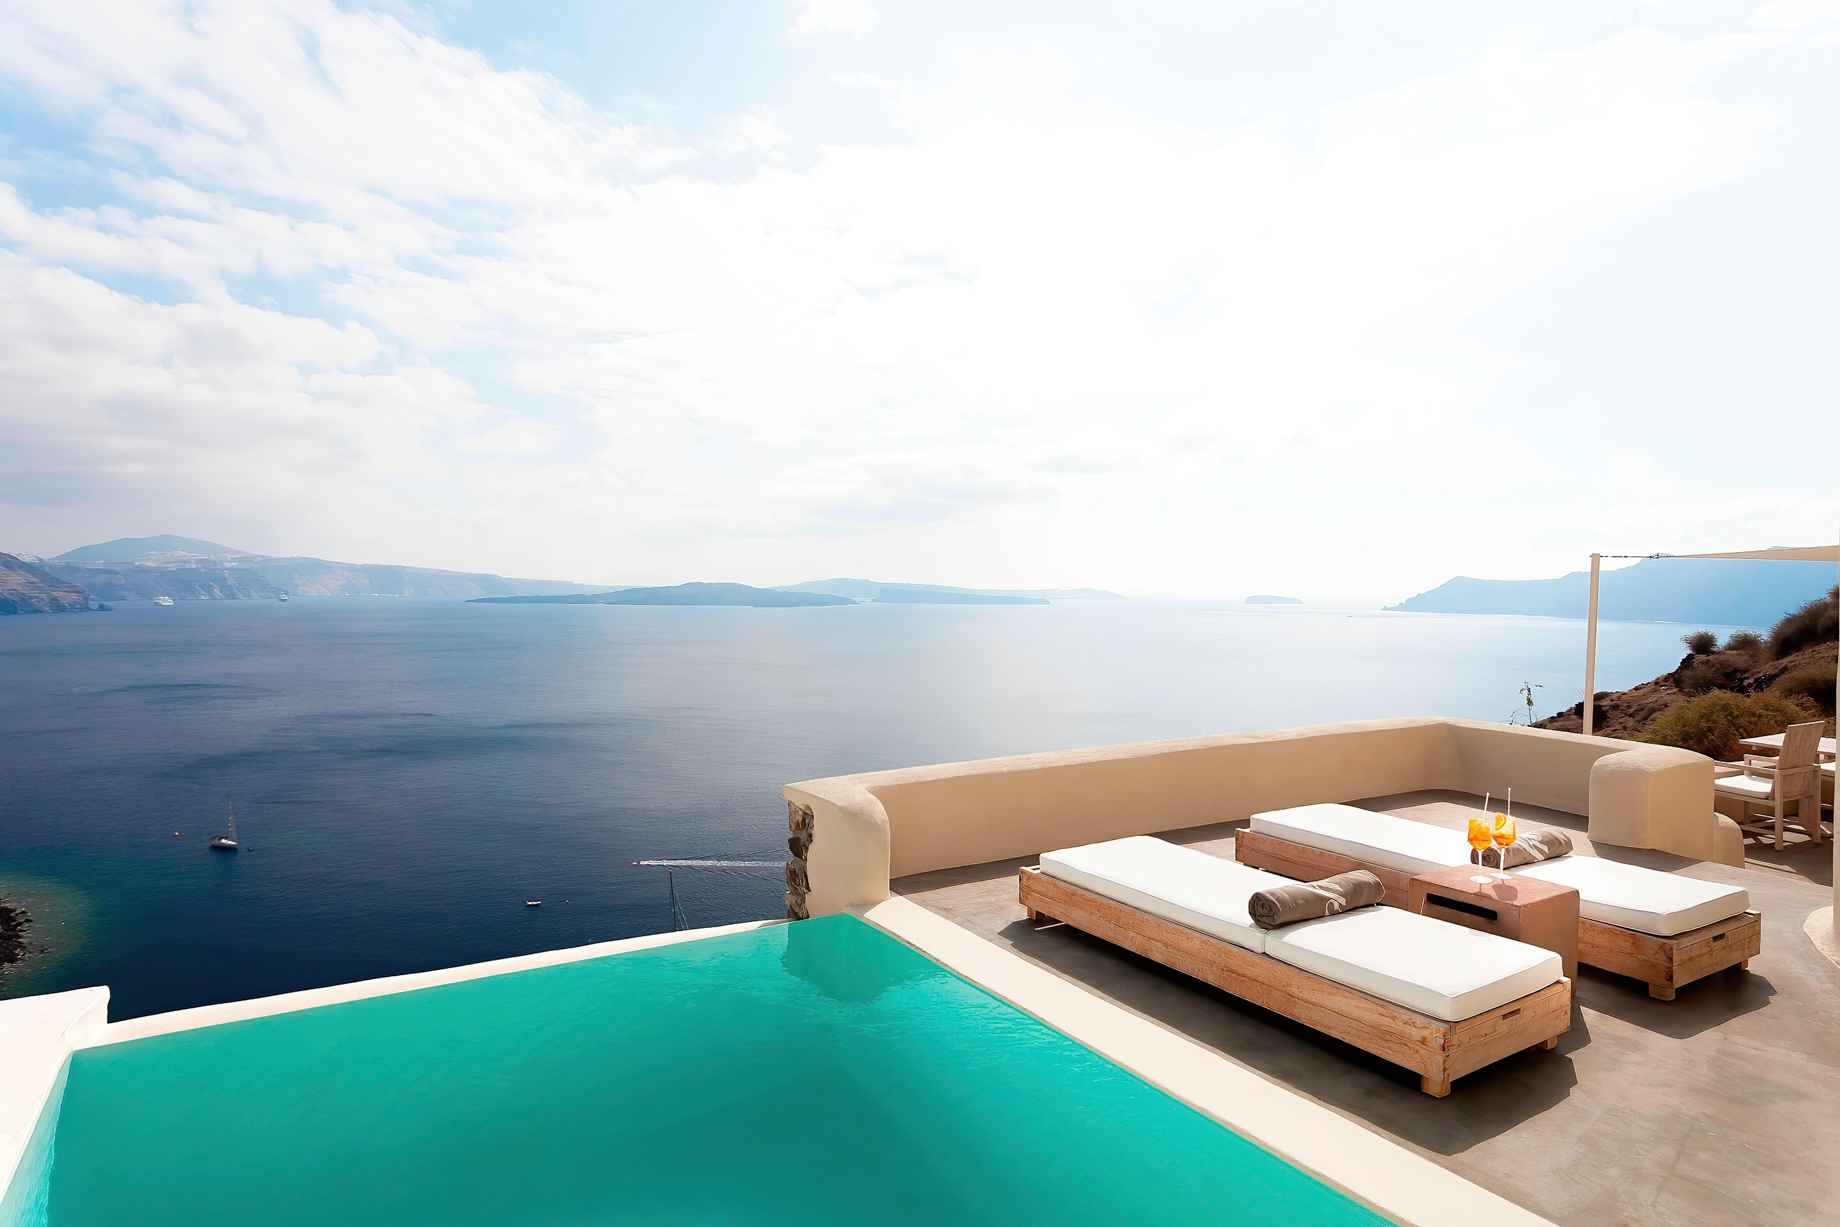 Mystique Hotel Santorini – Oia, Santorini Island, Greece - Mystery Villa Private Ocean View Pool Deck